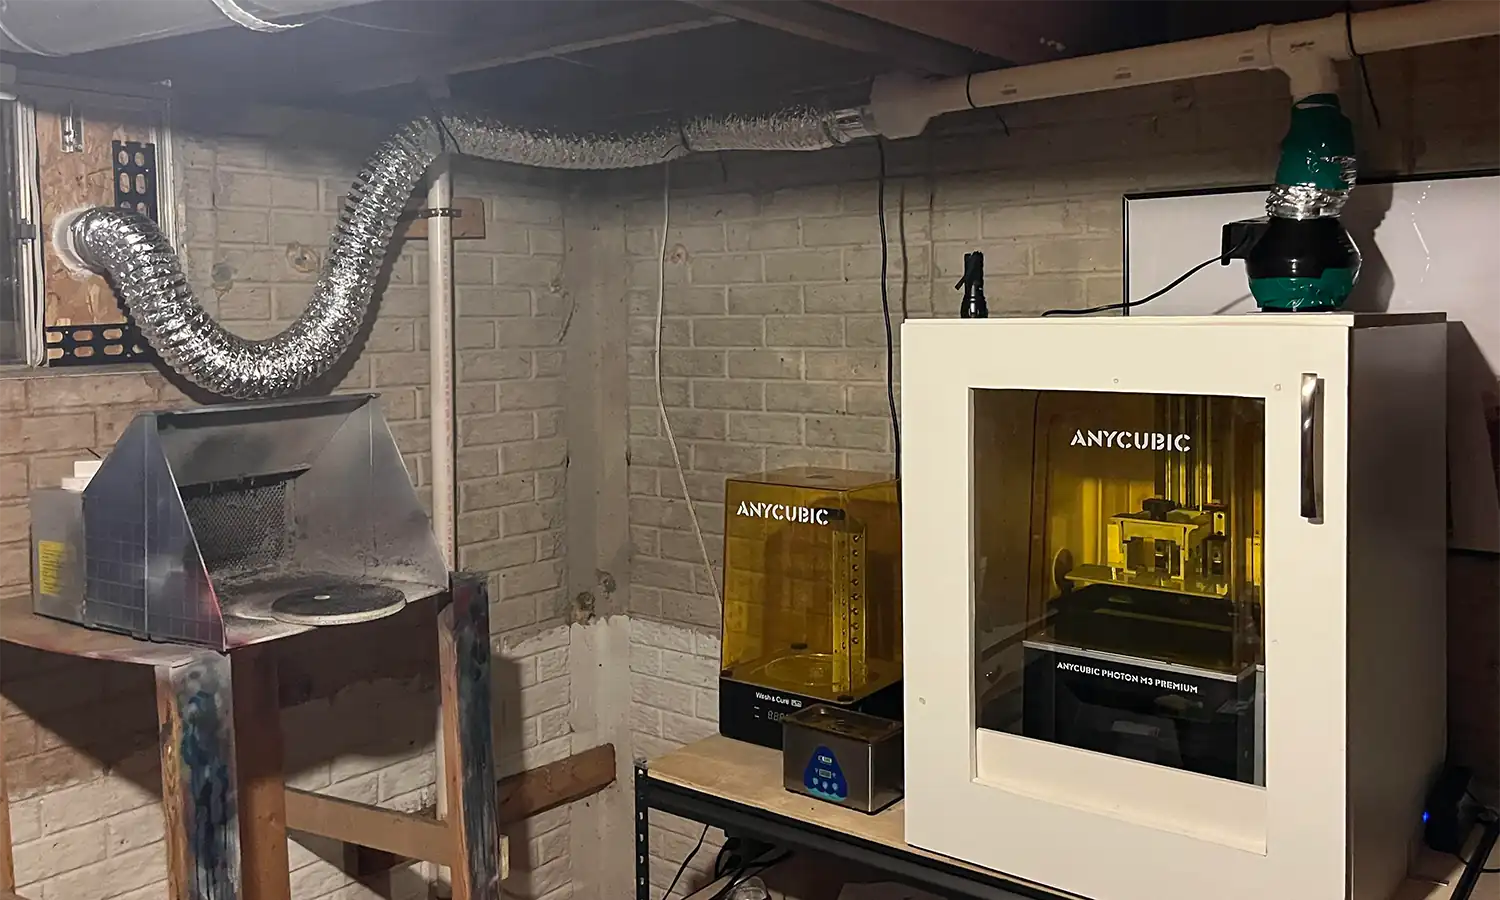 Example resin printer setup in a basement